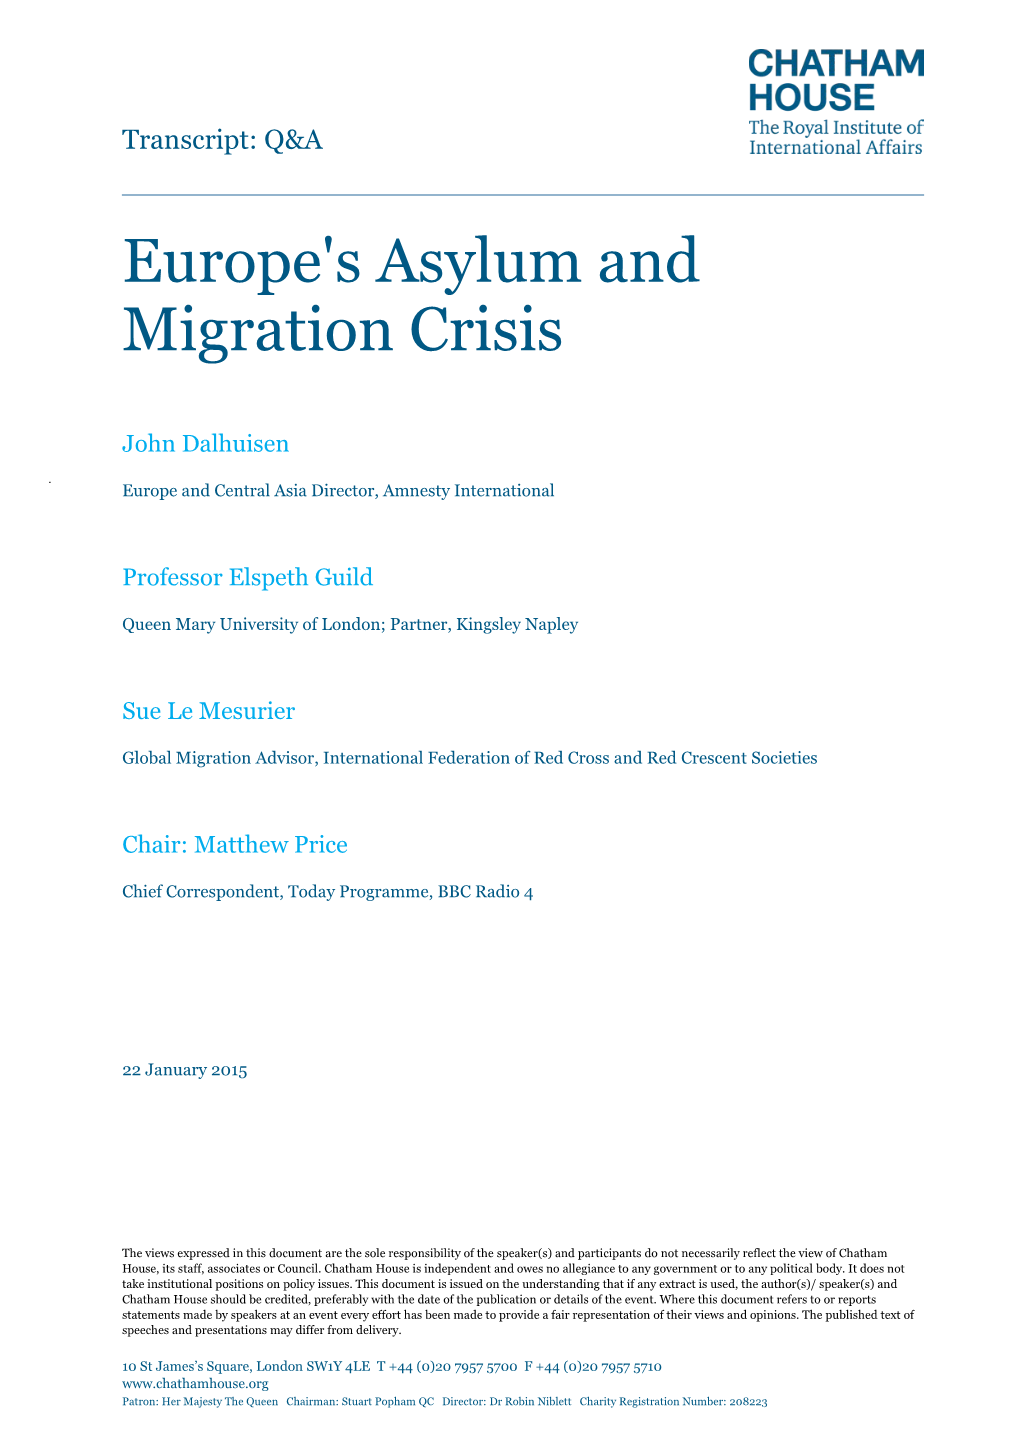 Europe's Asylum and Migration Crisis